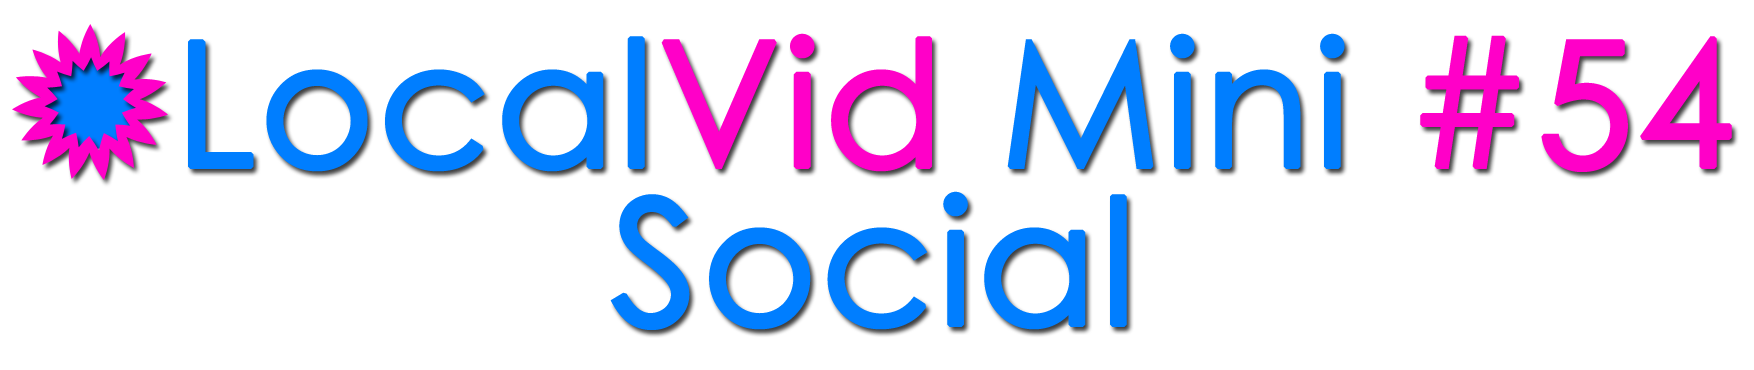 Logo Local Vid Mini Social 54